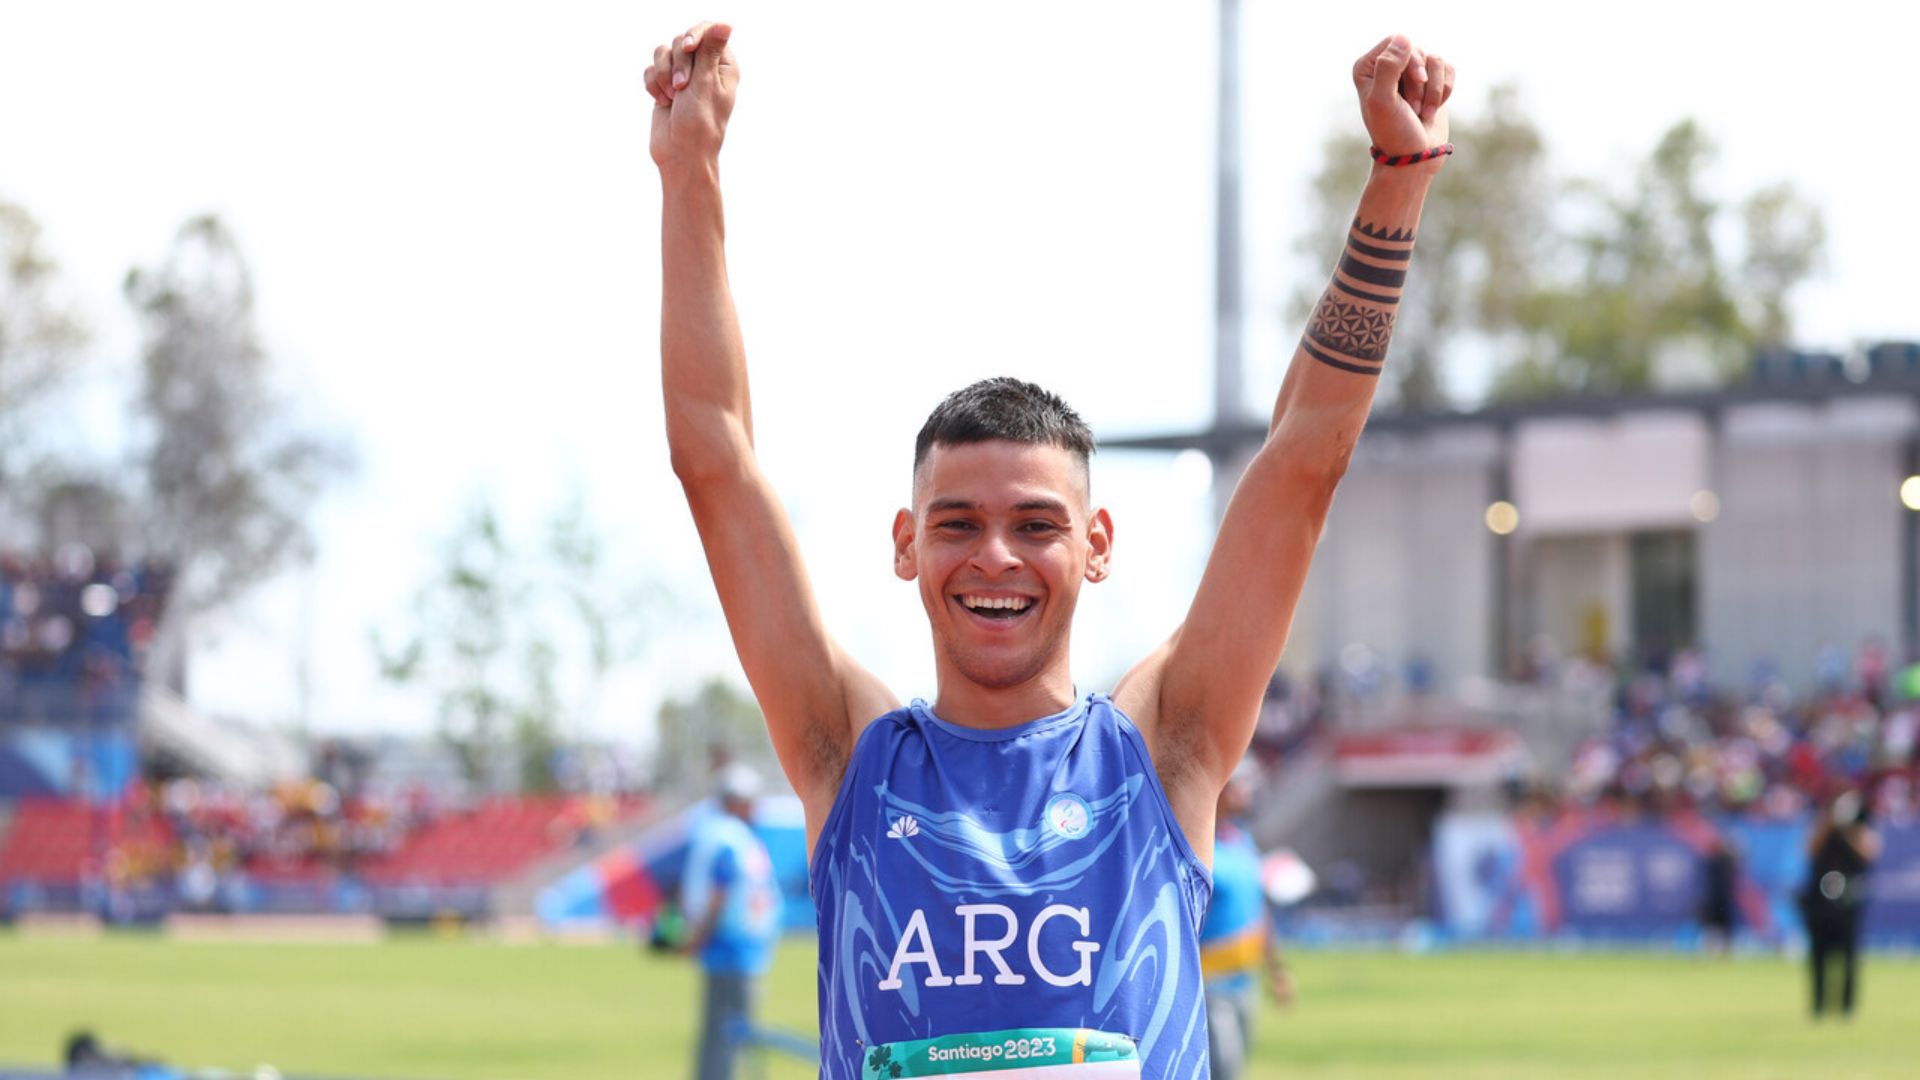 Para Athletics: Argentina, Colombia Excel in 400 Meters T36/37